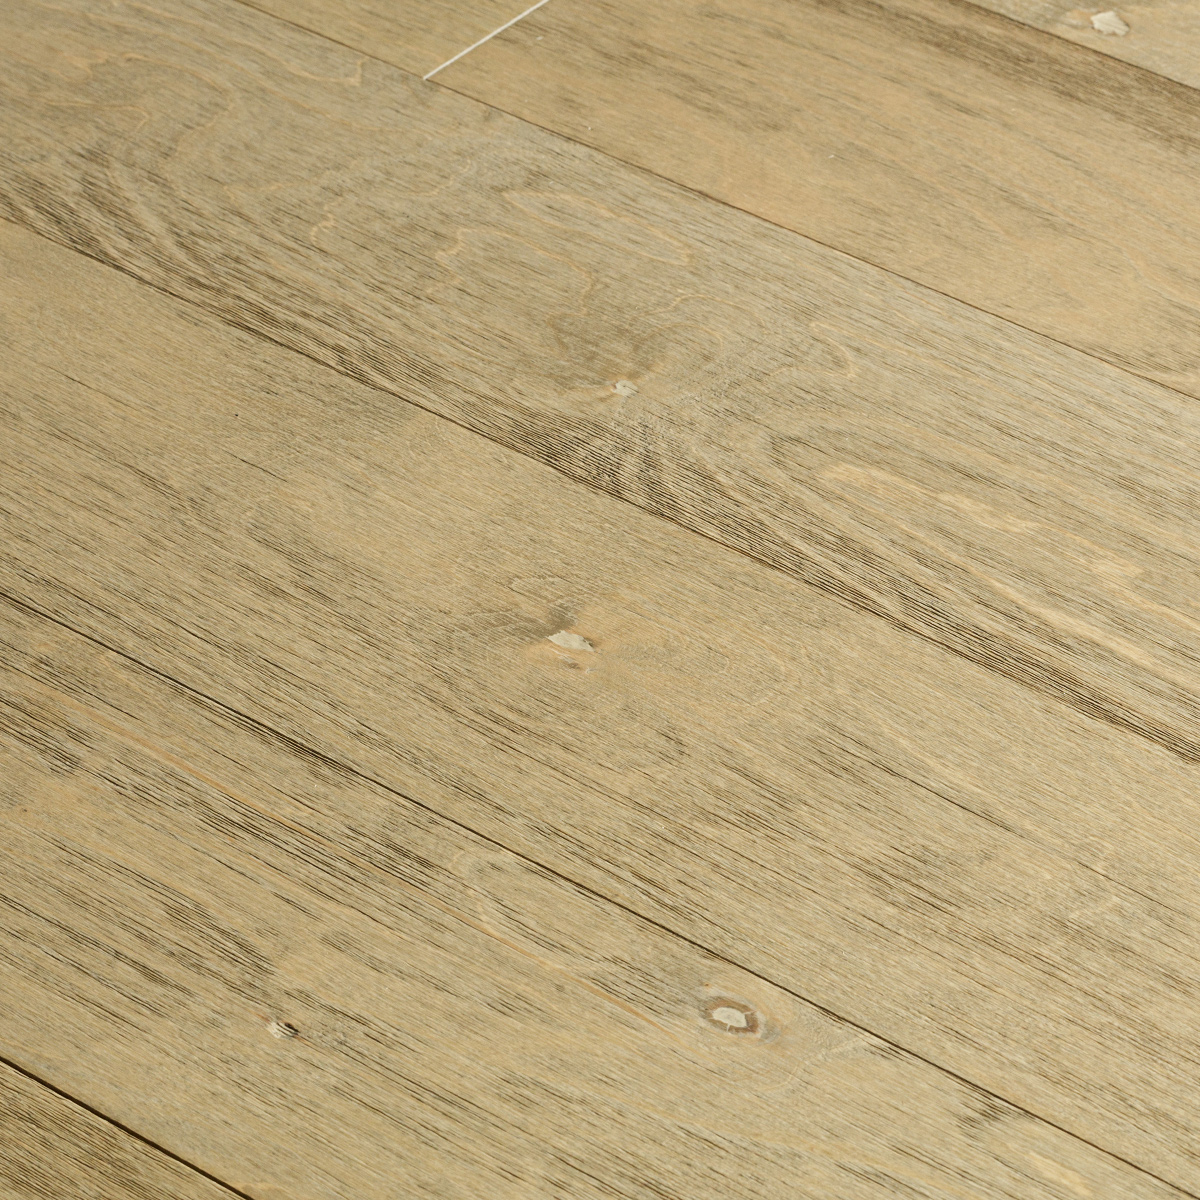 Reble Wood Flooring Wholer, Oasis Laminate Flooring Reviews